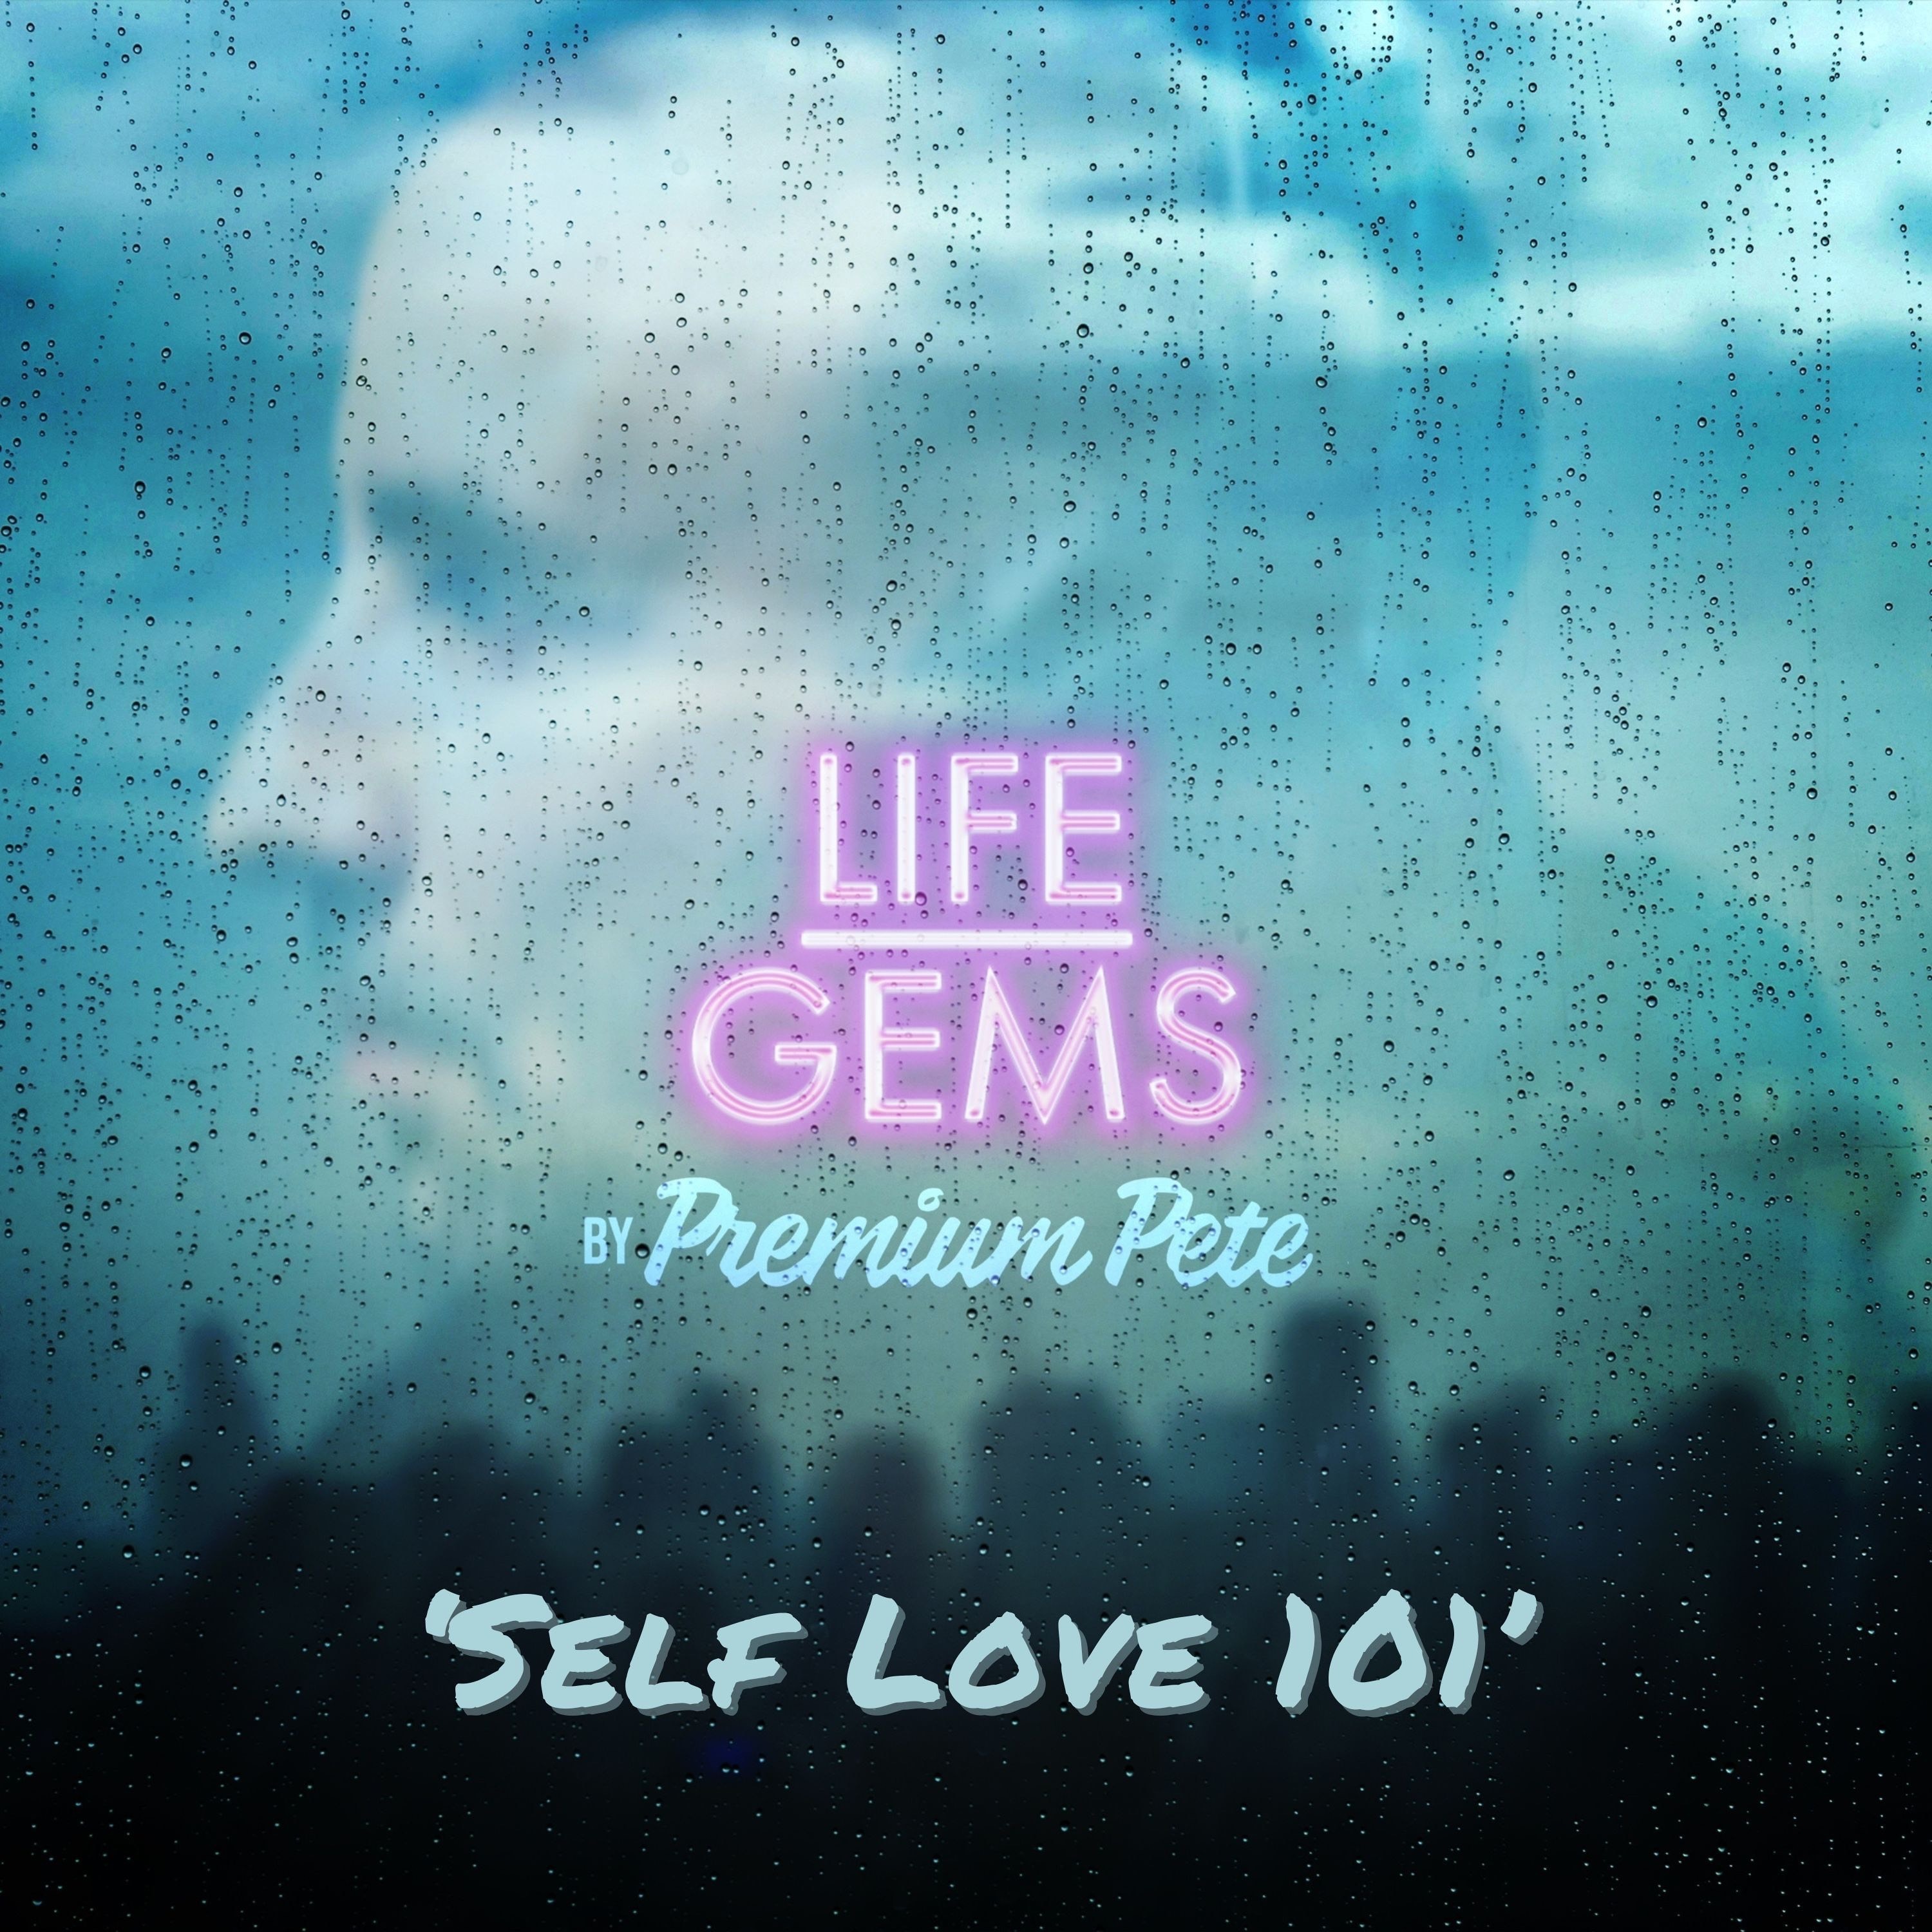 Life Gems ”Self Love 101”